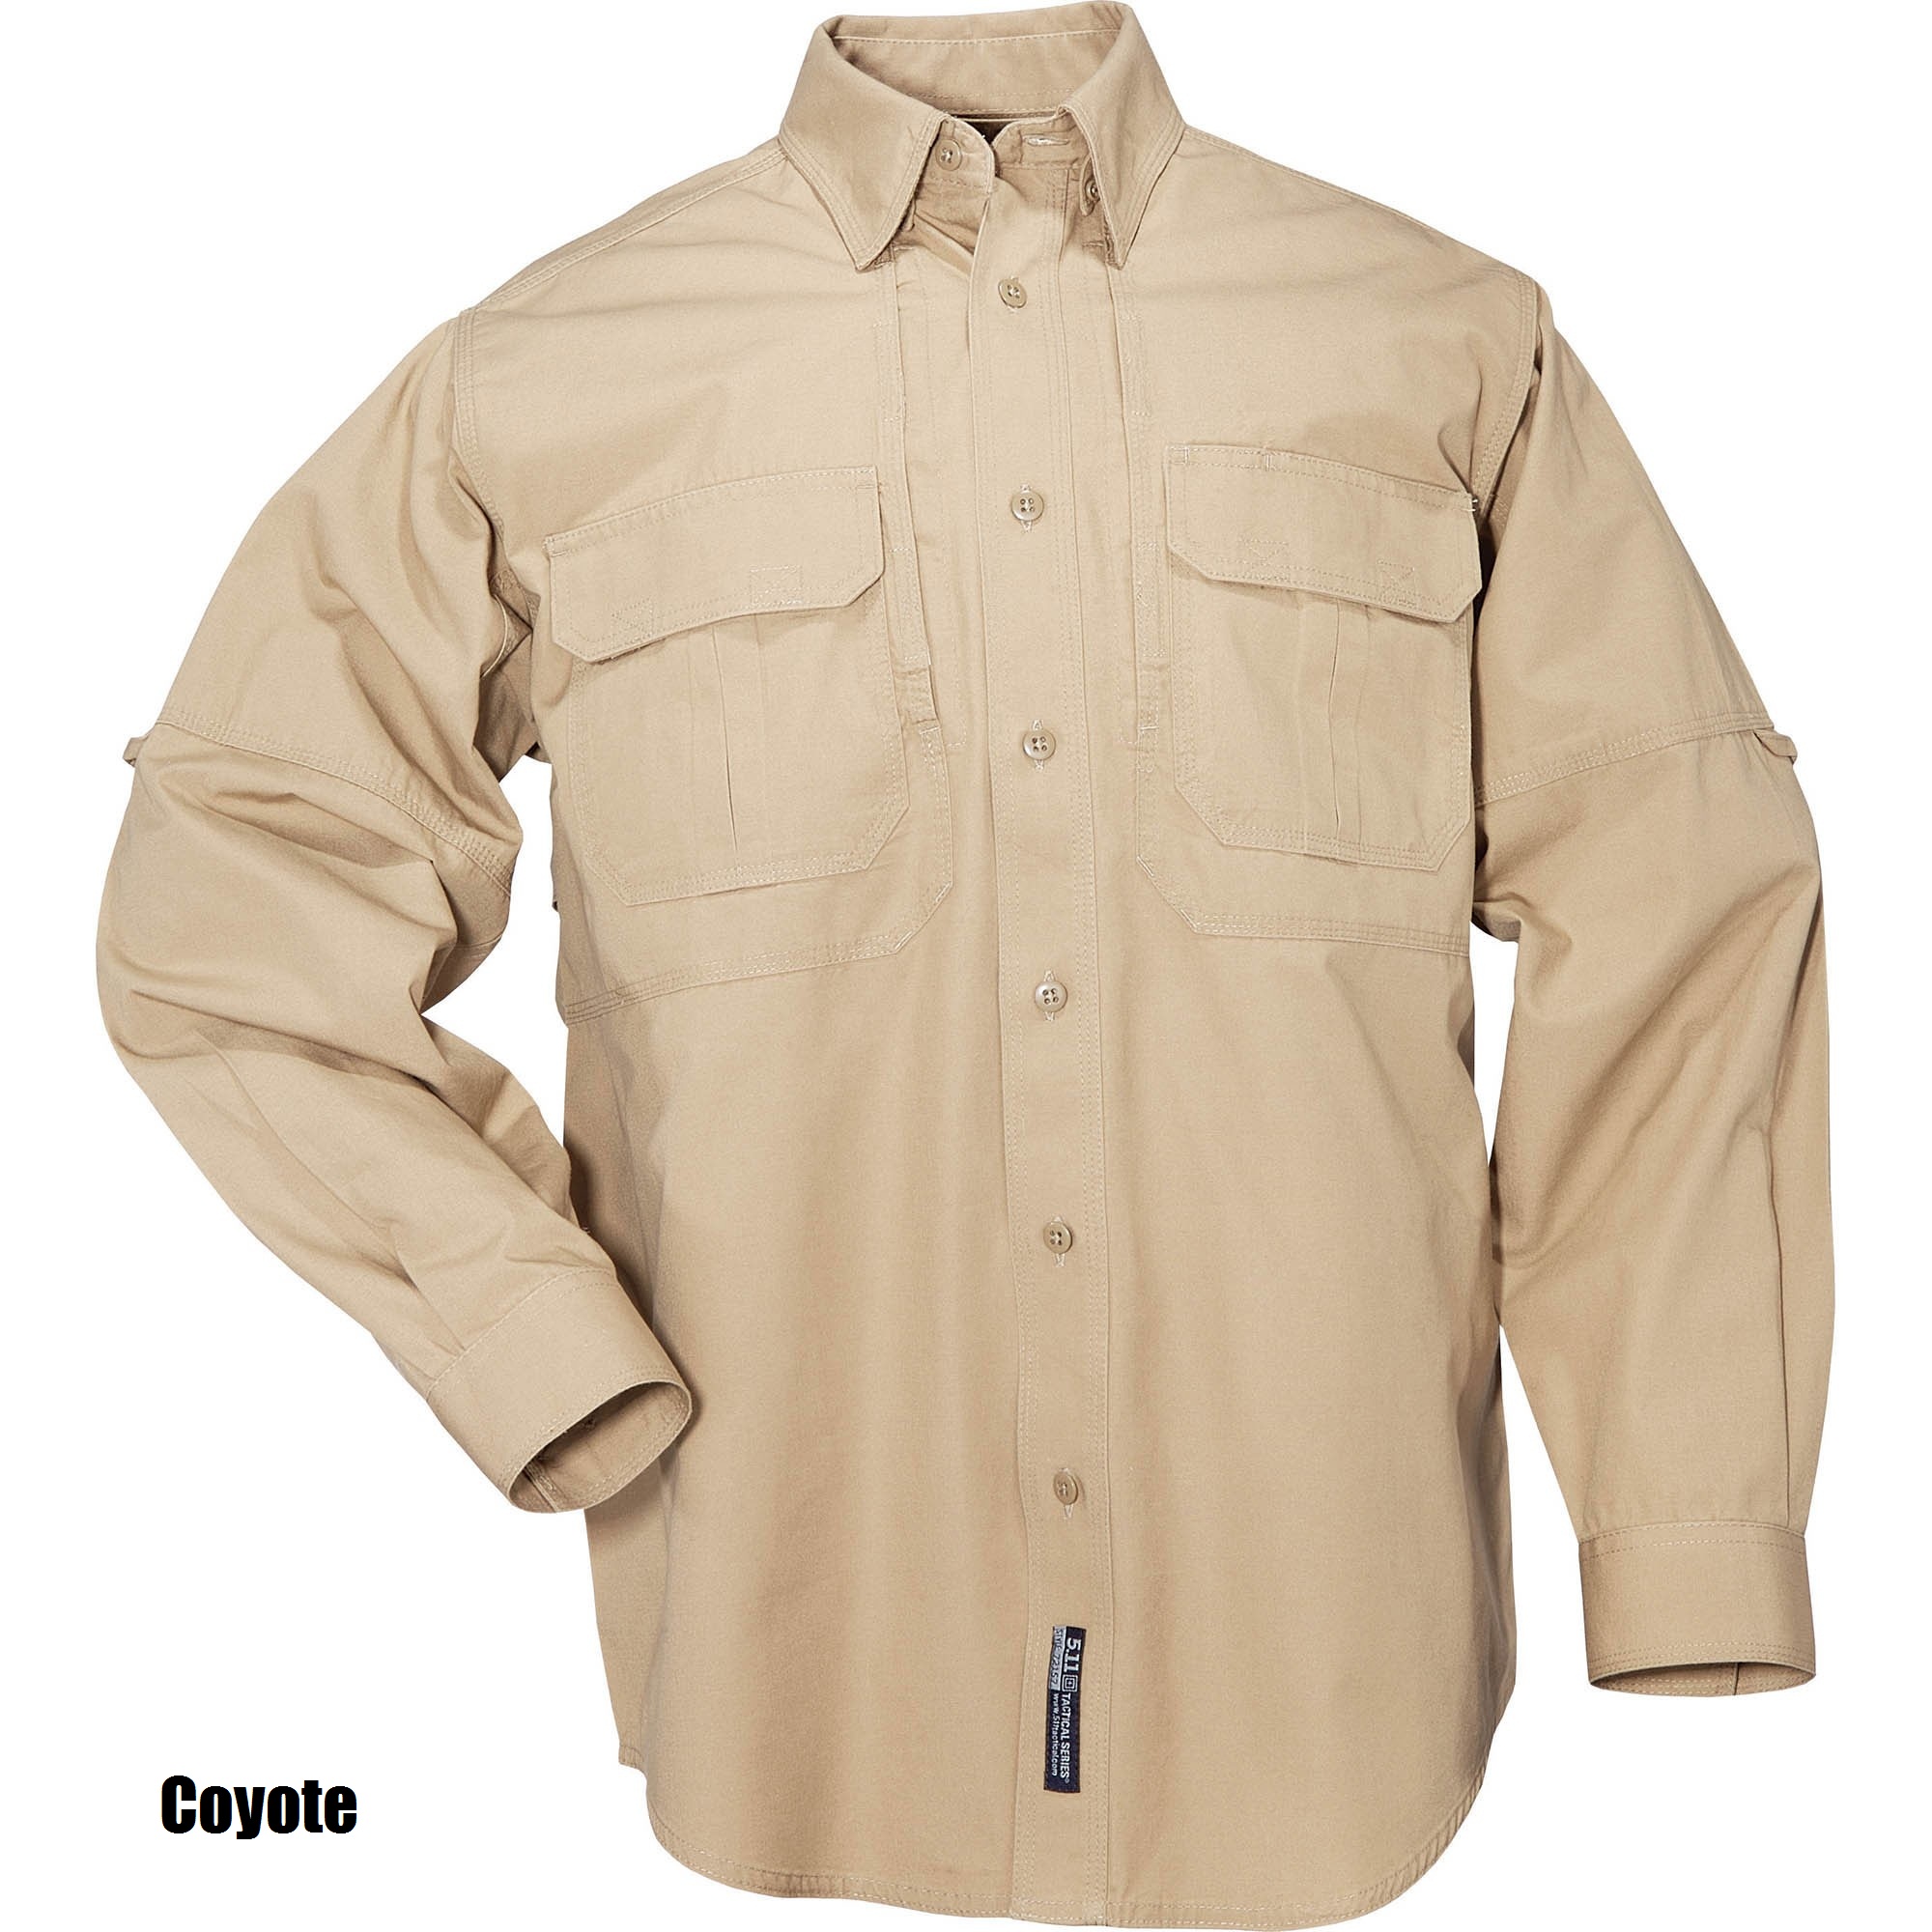 5.11® Tactical Shirt – Long Sleeve